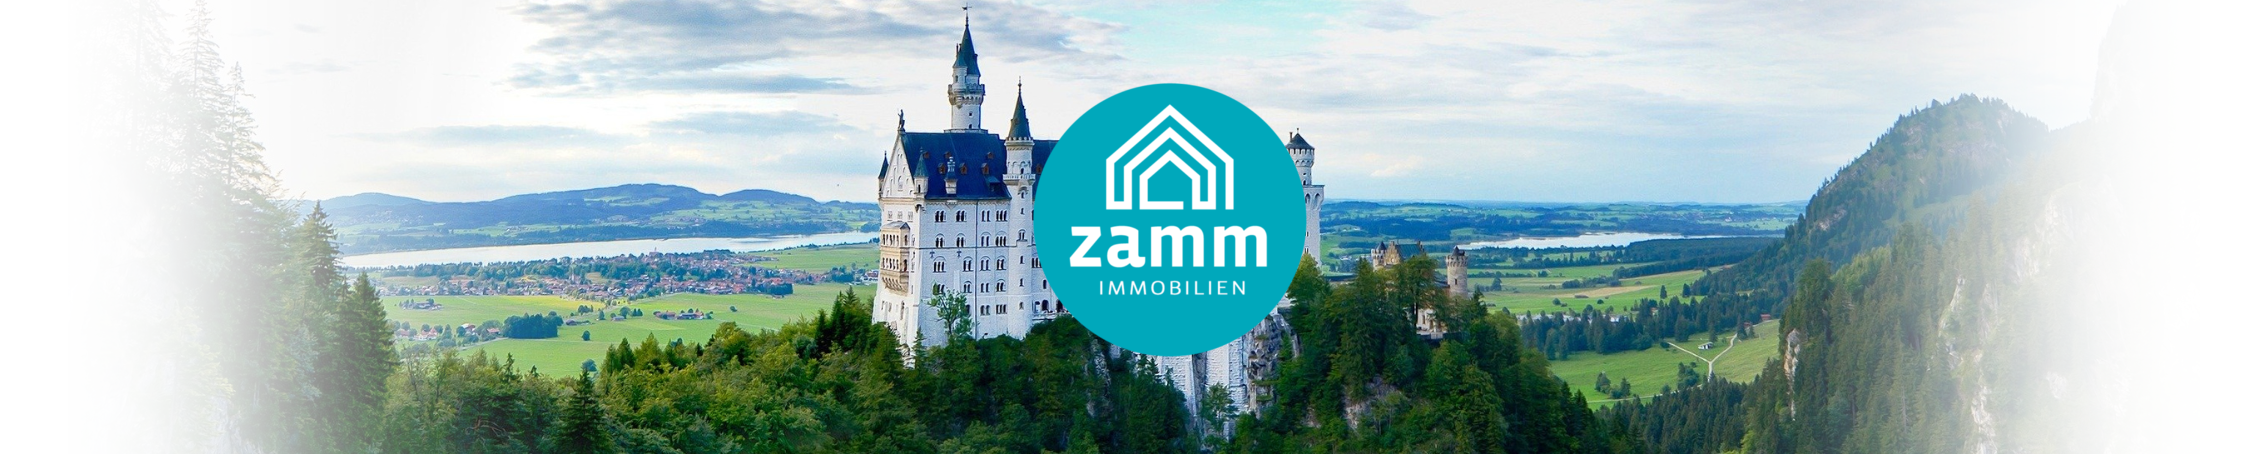 zamm Immobilien GmbH